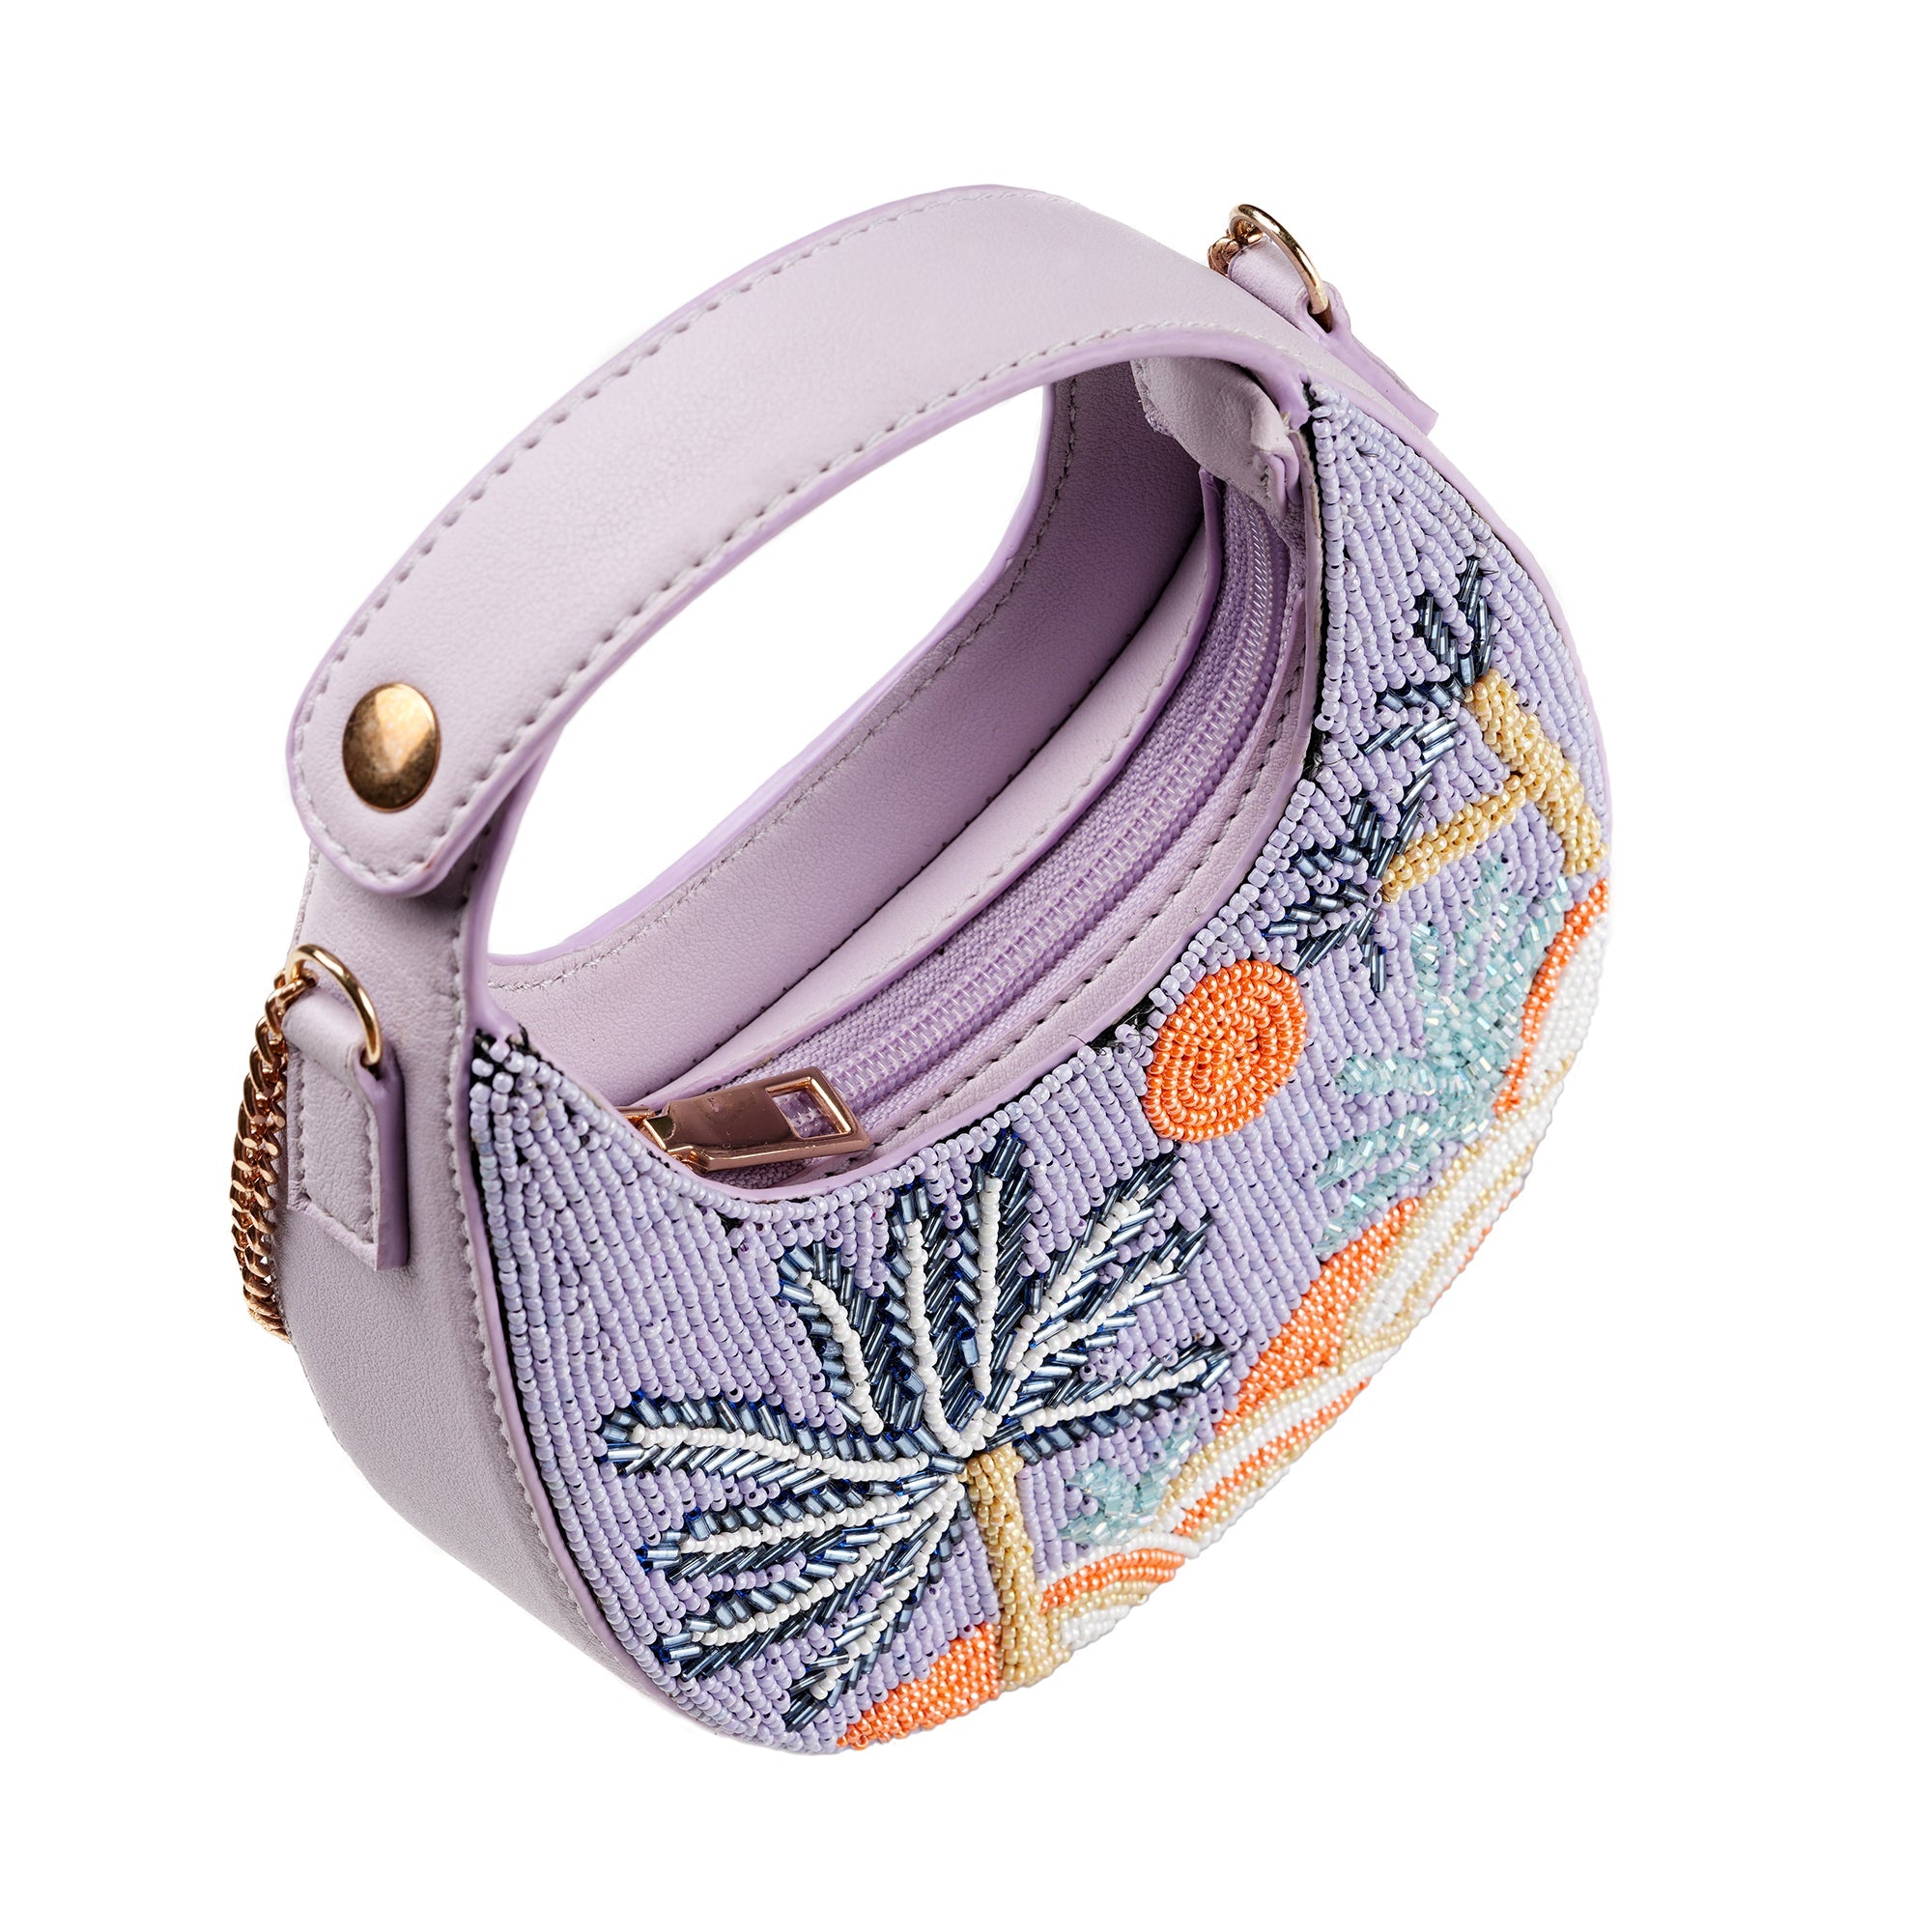 Lavender Alsa Mini Bag